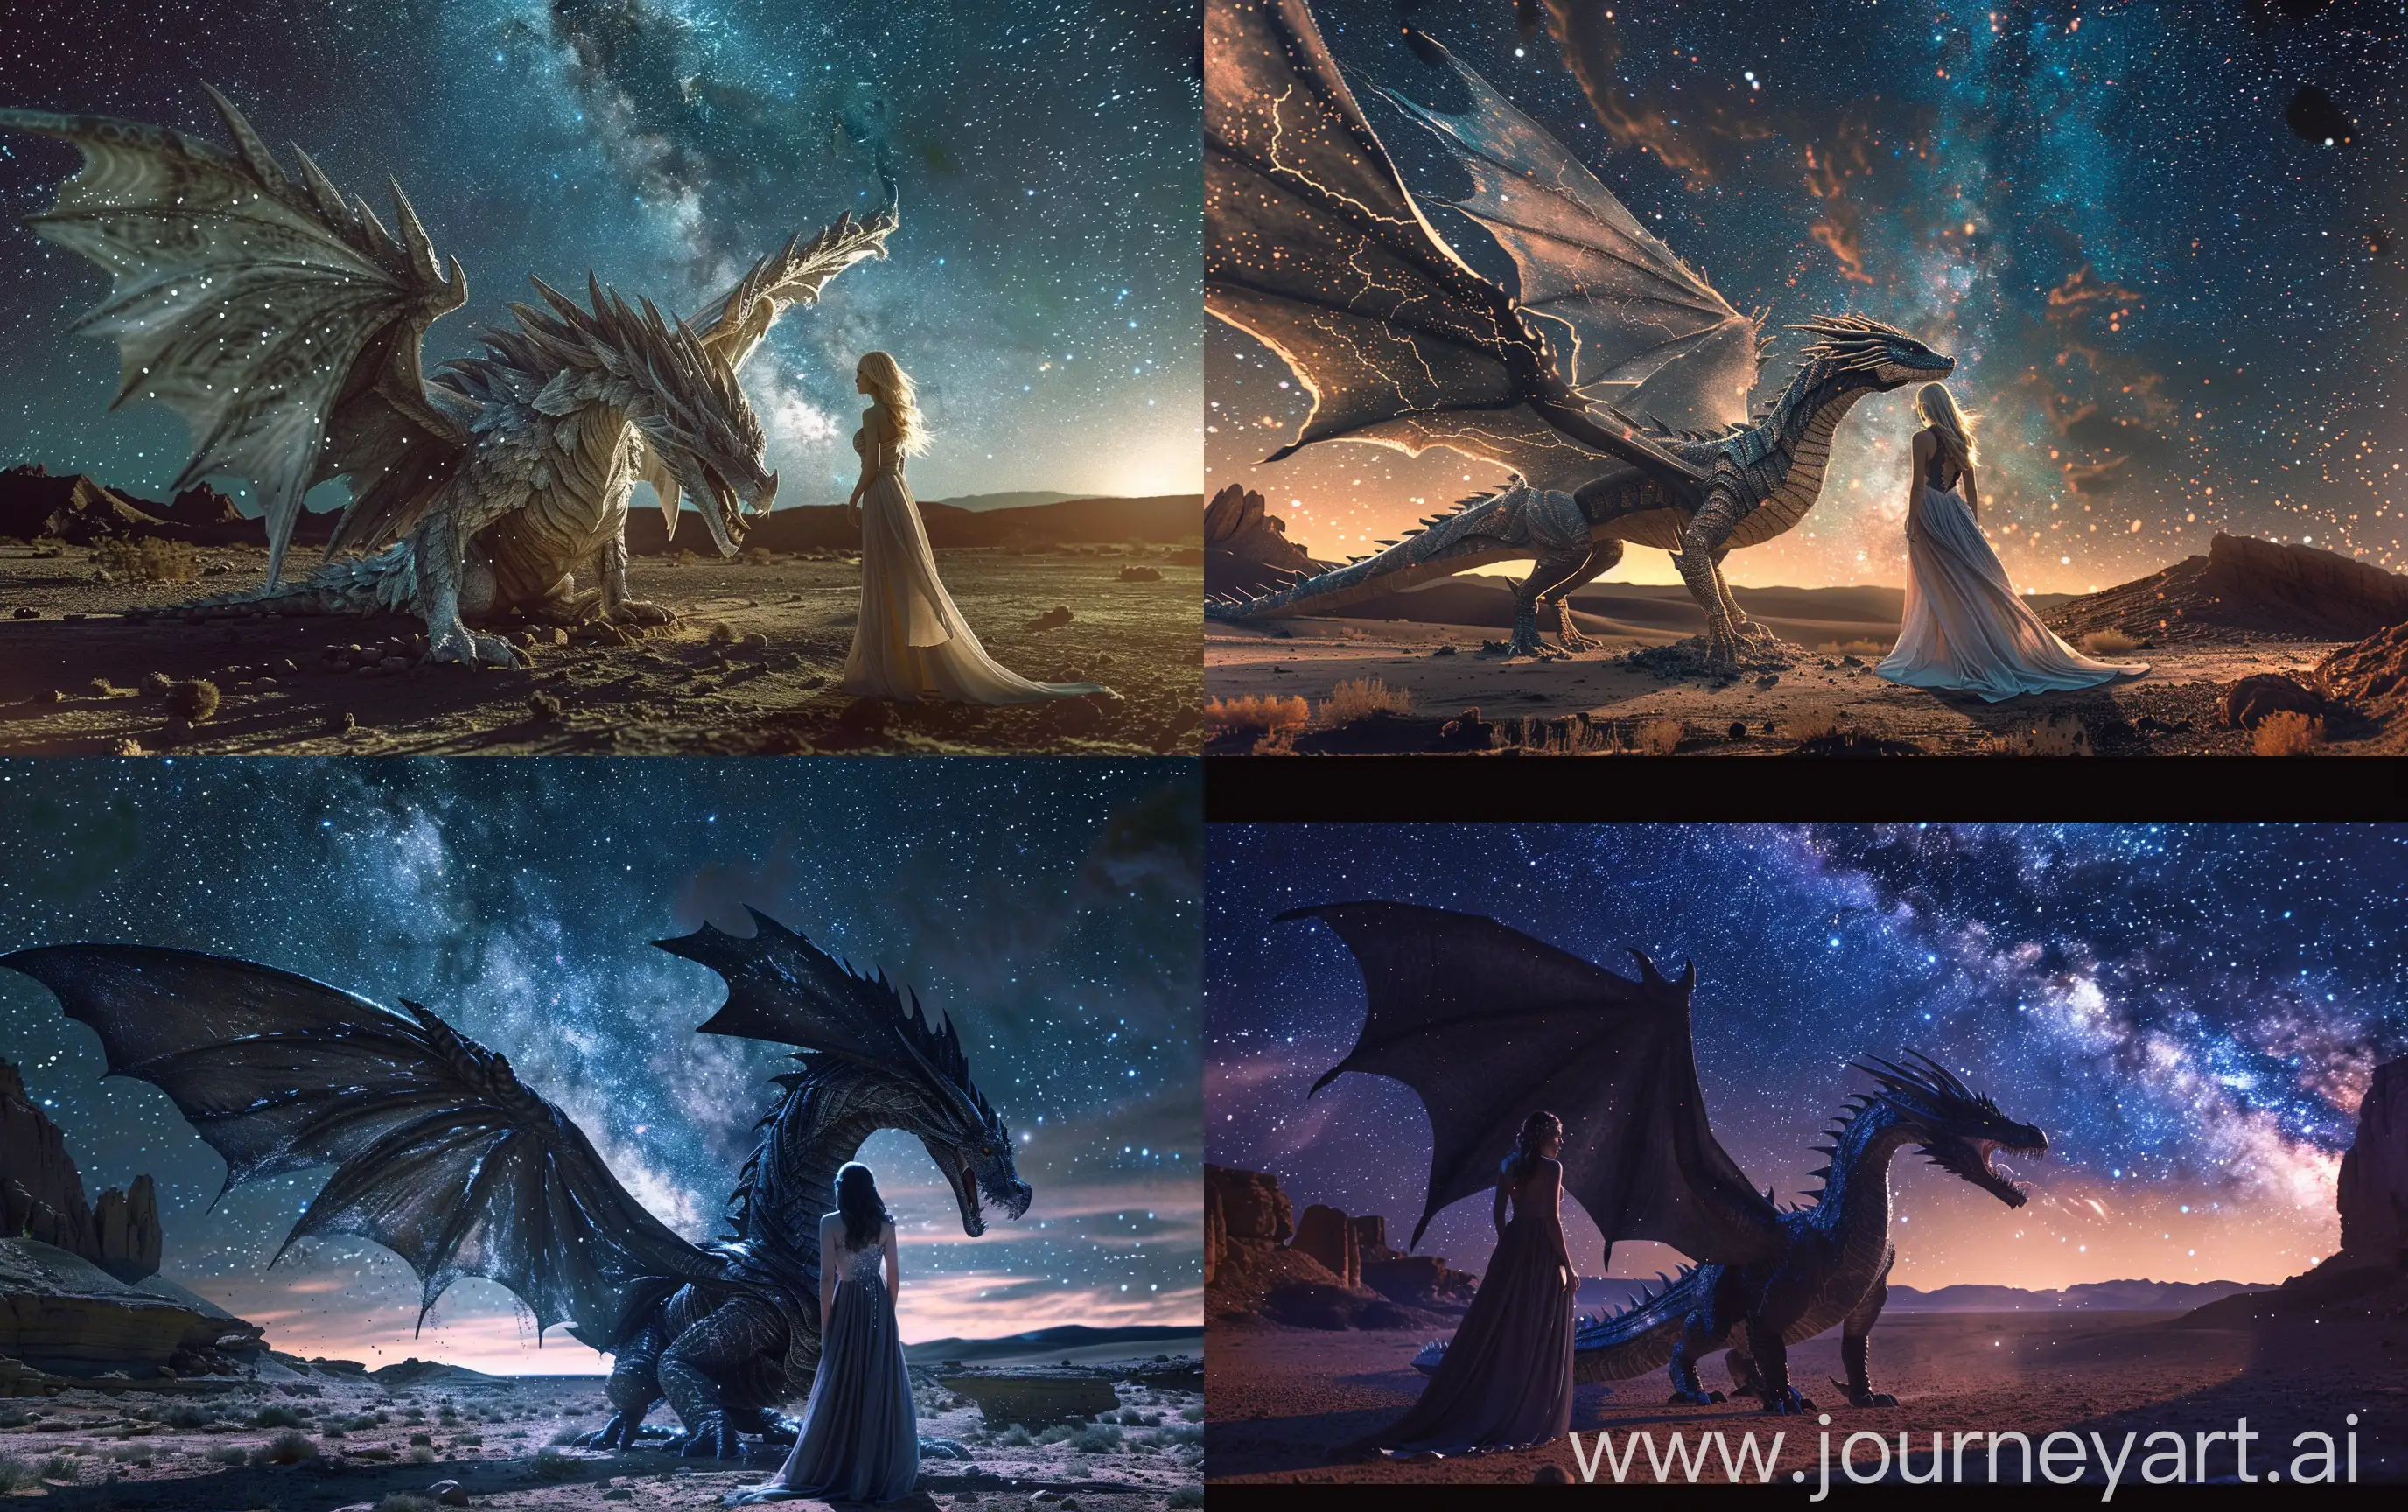 Majestic-Nebula-Dragon-Encounter-with-Enigmatic-Beauty-in-Desert-Night